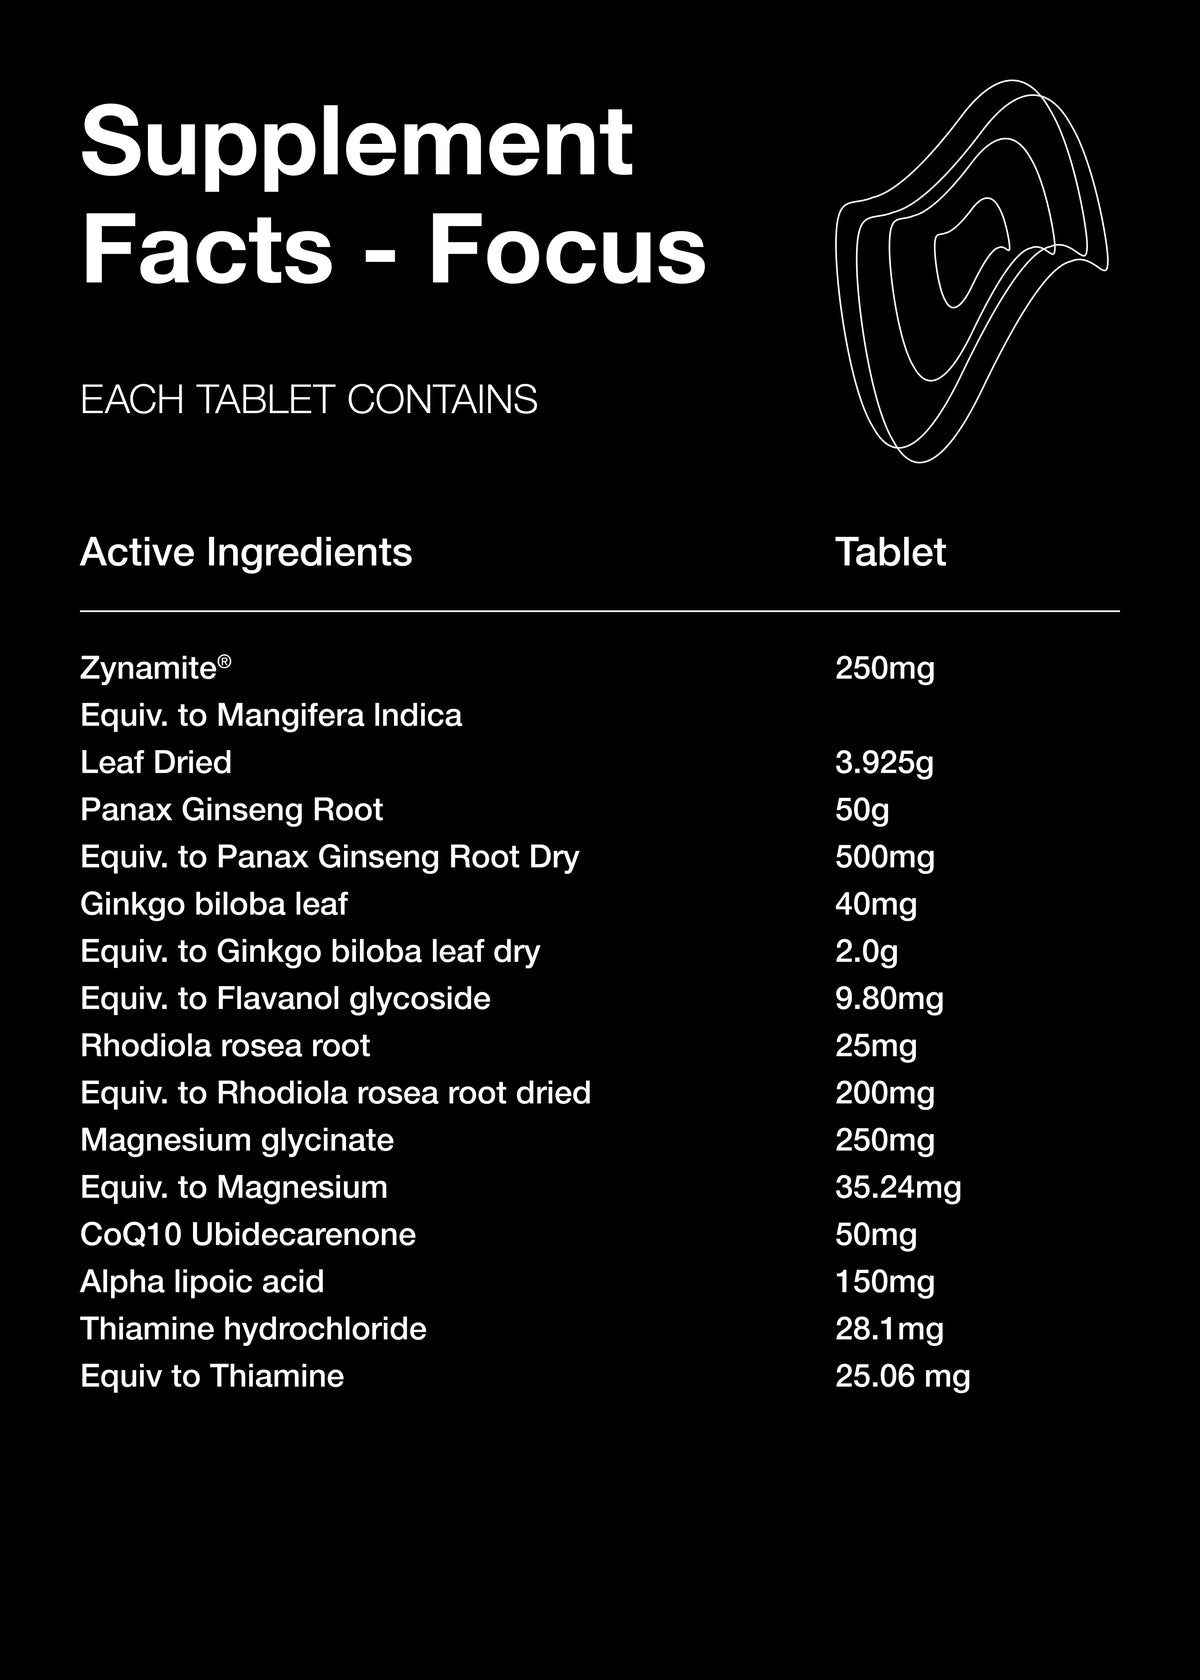 Yootropics Focus showcasing active ingredients